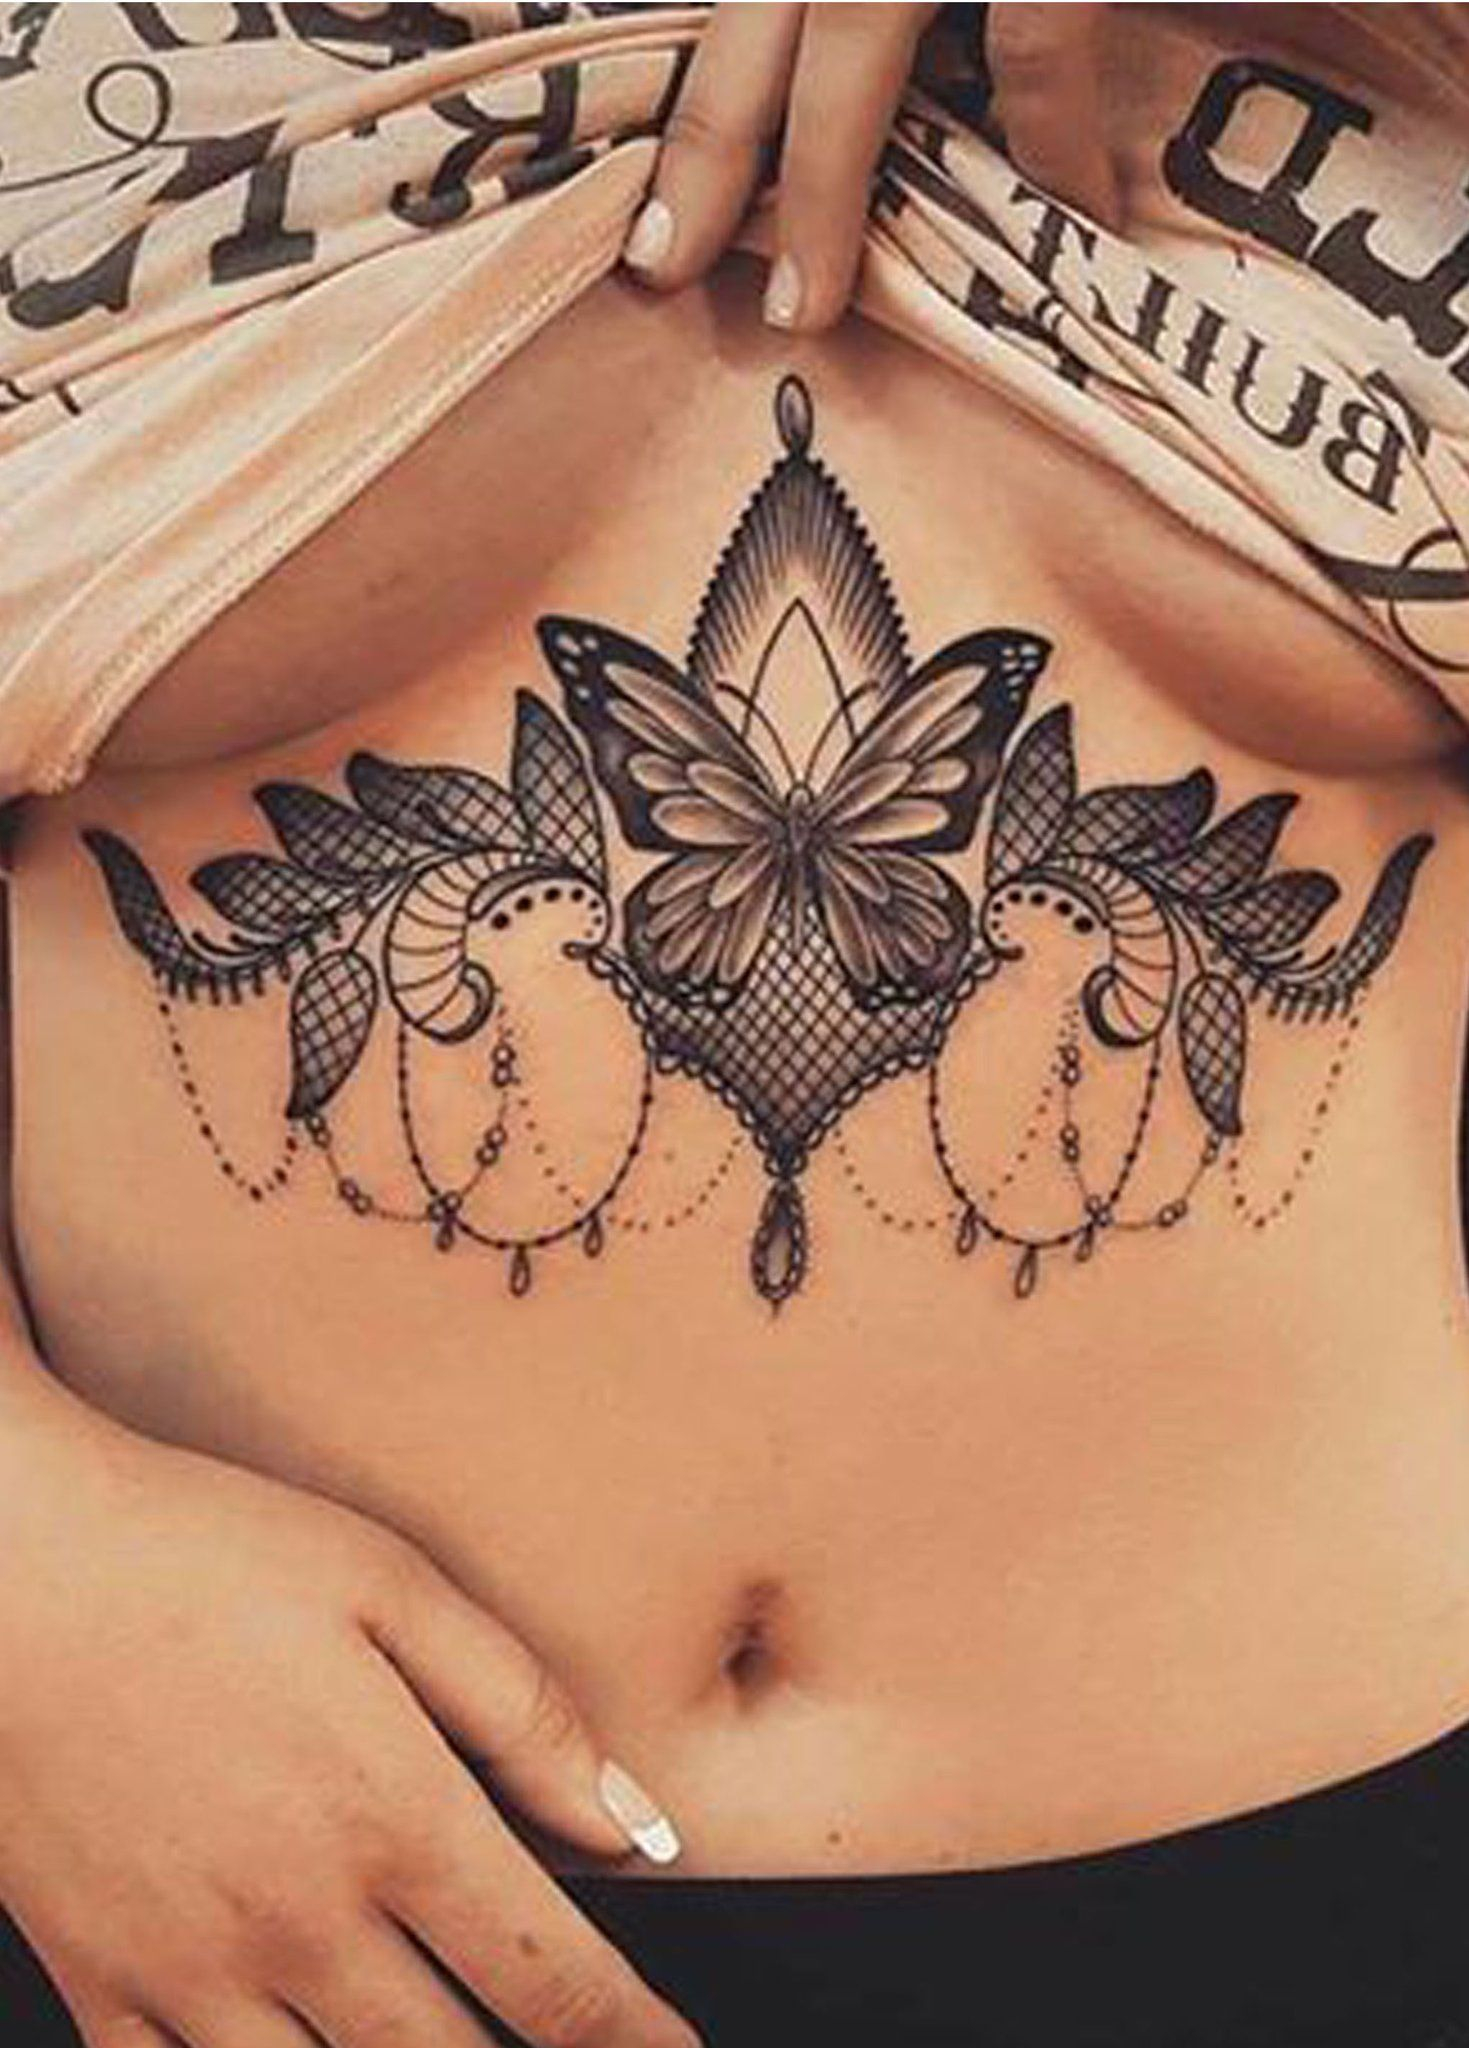 Womens Unique Butterfly Sternum Tattoo Ideas Cool Chandelier Lace in measur...